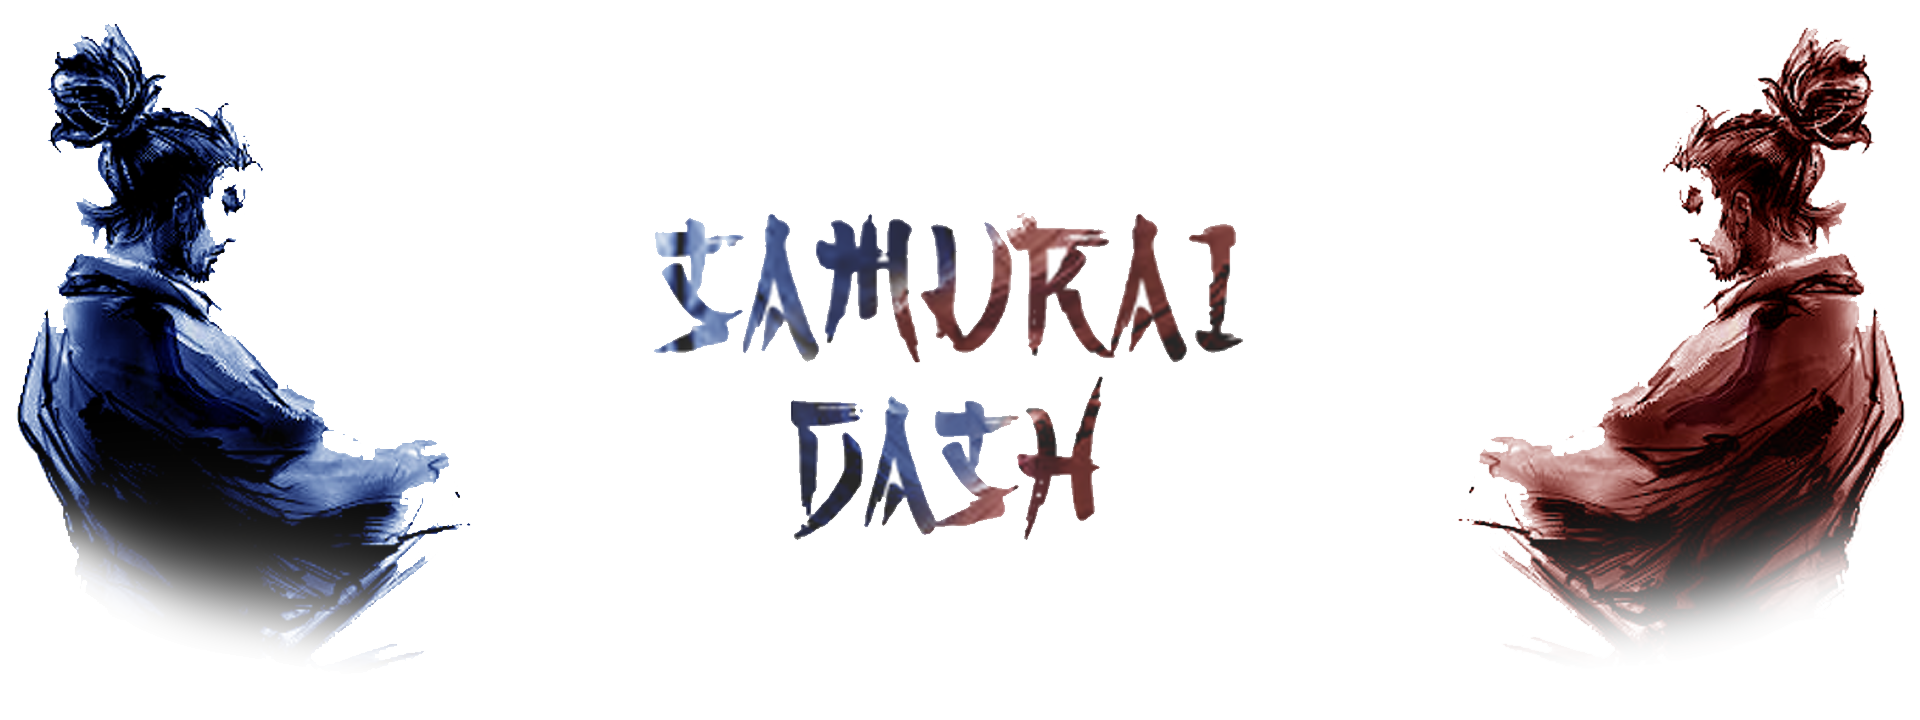 Samurai Dash